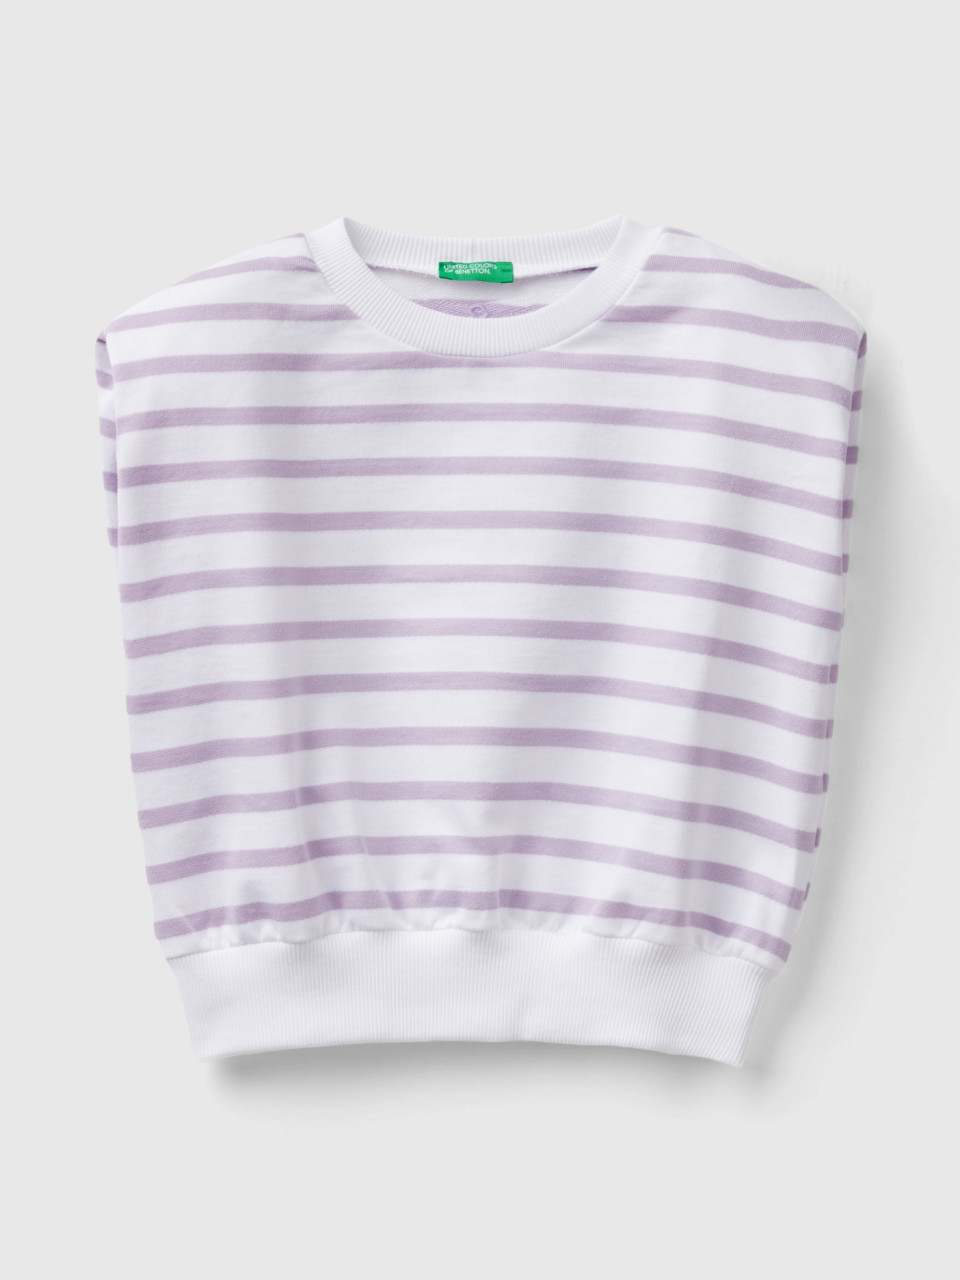 Benetton, Striped Top In Sweat Fabric, Lilac, Kids